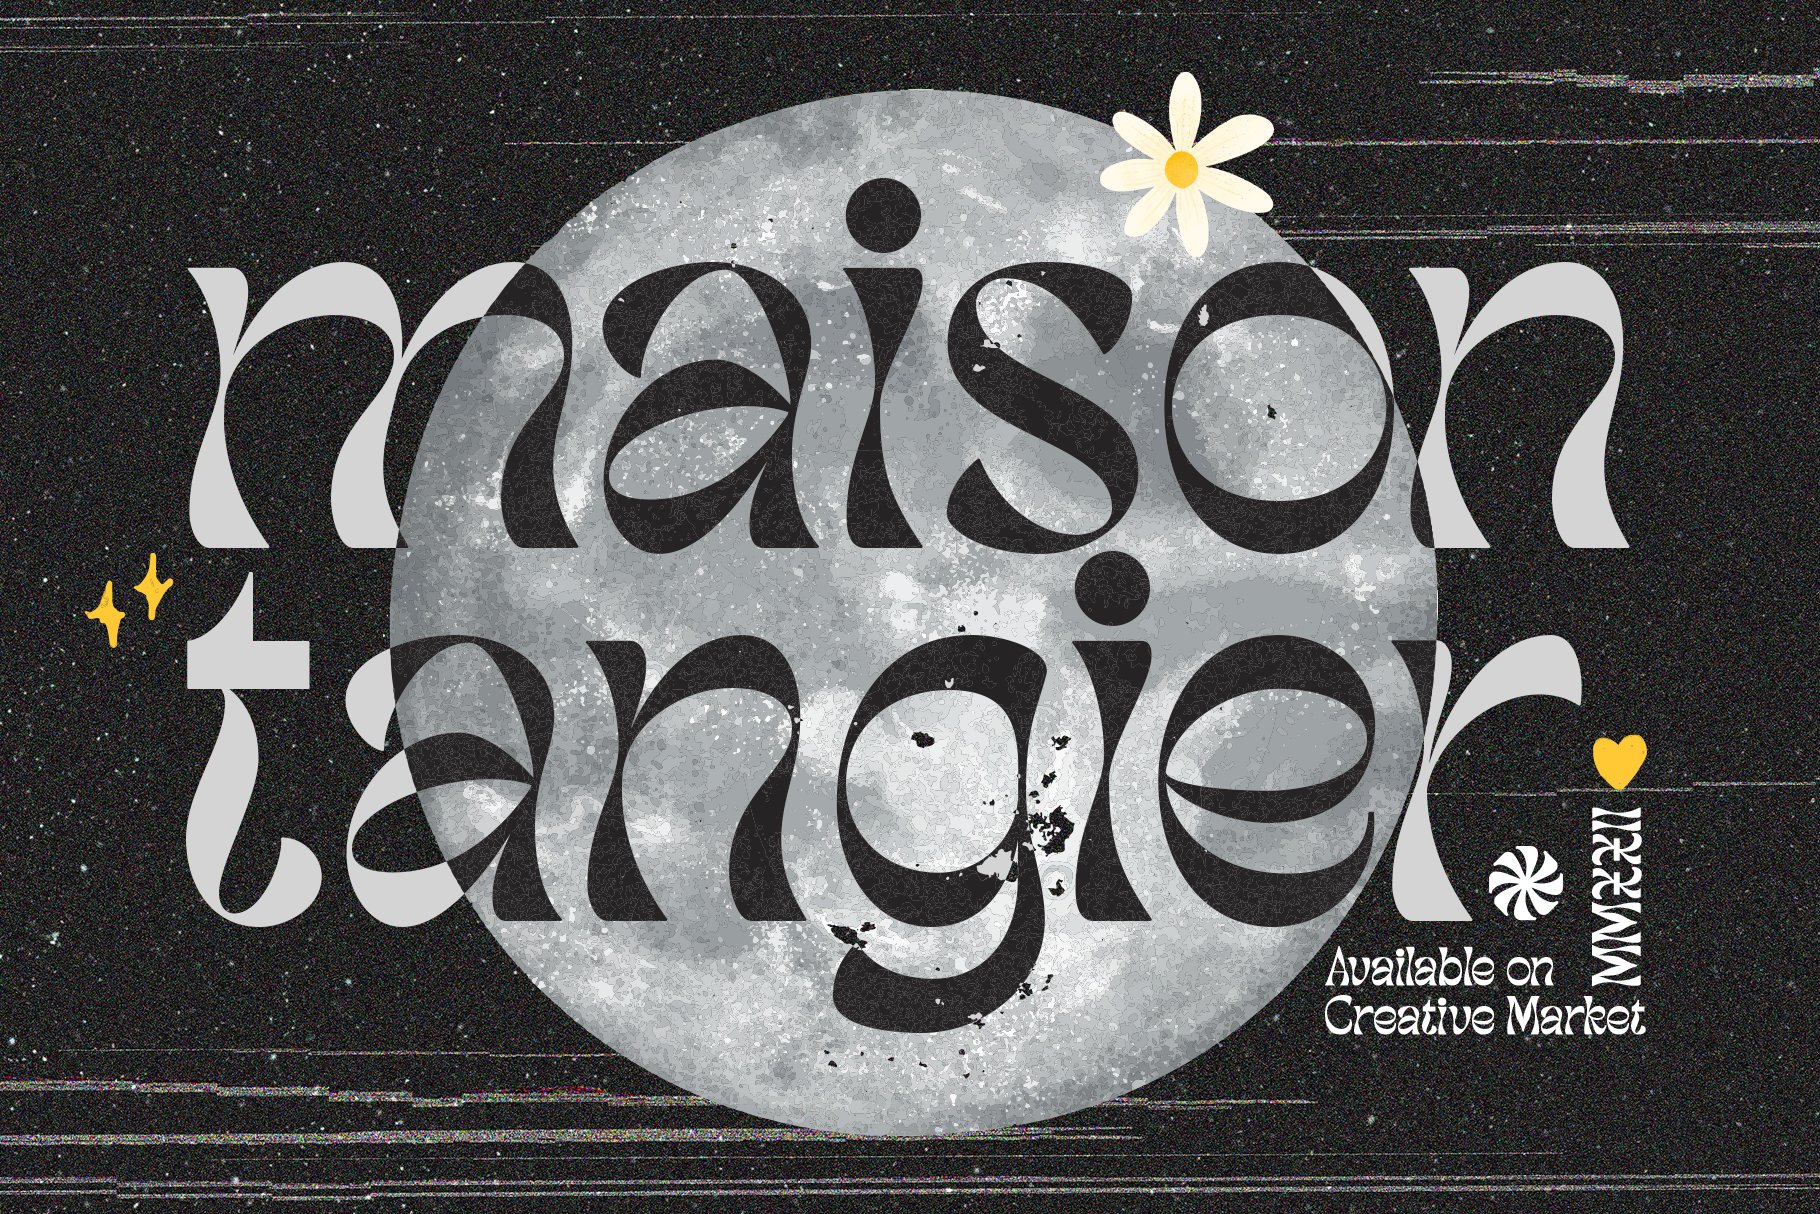 TAN - MAISON TANGIER cover image.